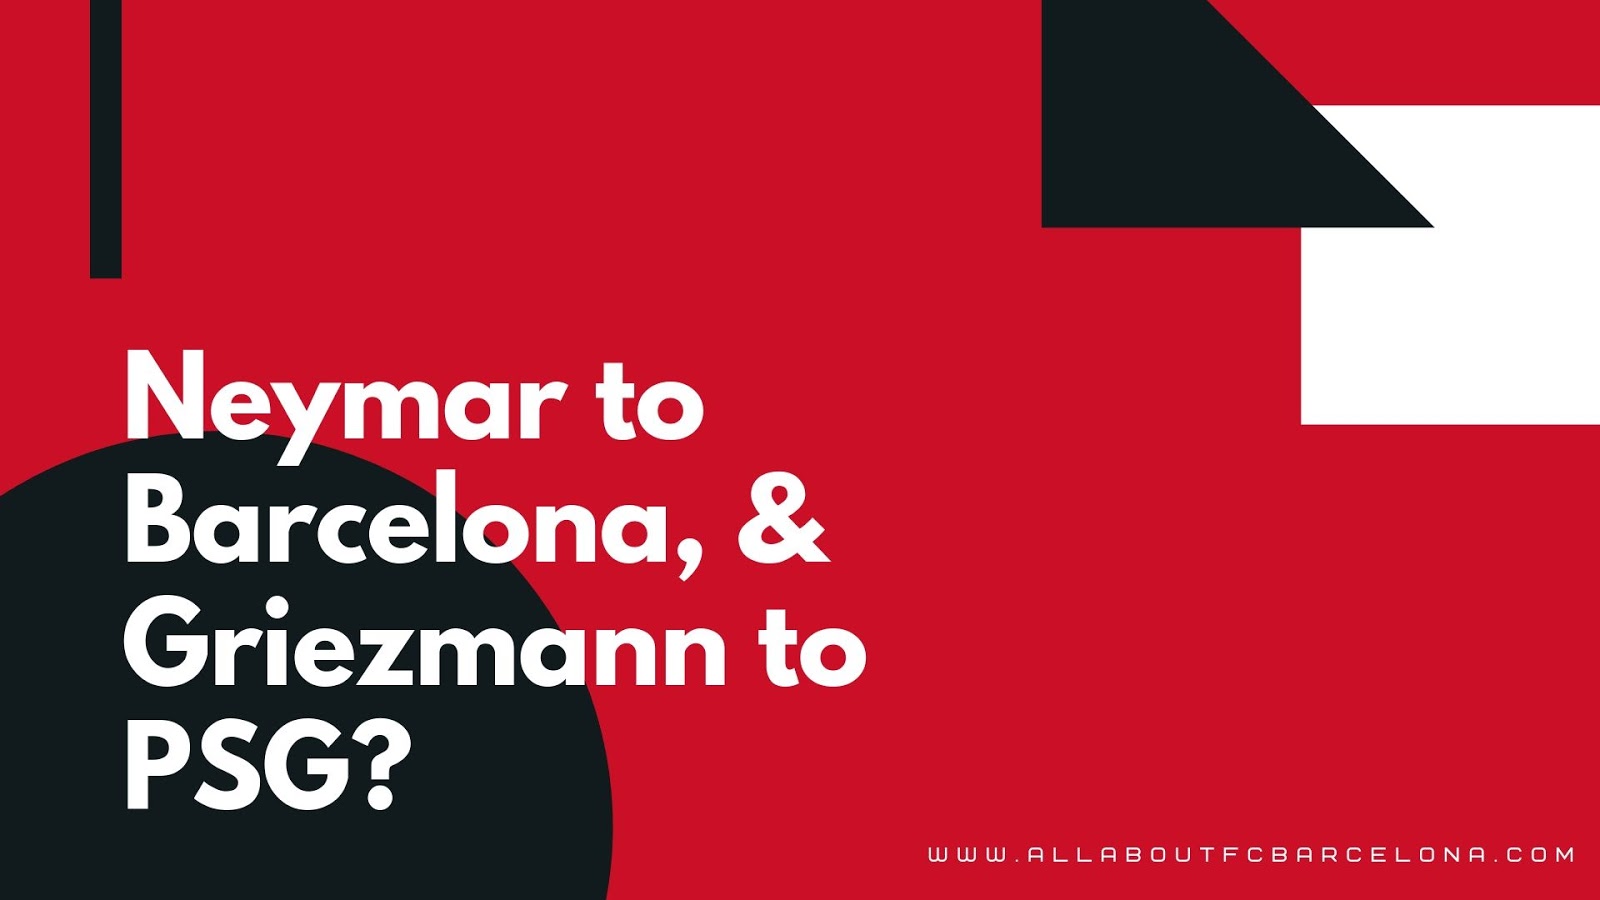 Is Surprisingly Neymar Heading to Barcelona, and Griezmann to PSG? #Barca #FCBarcelona #Neymar